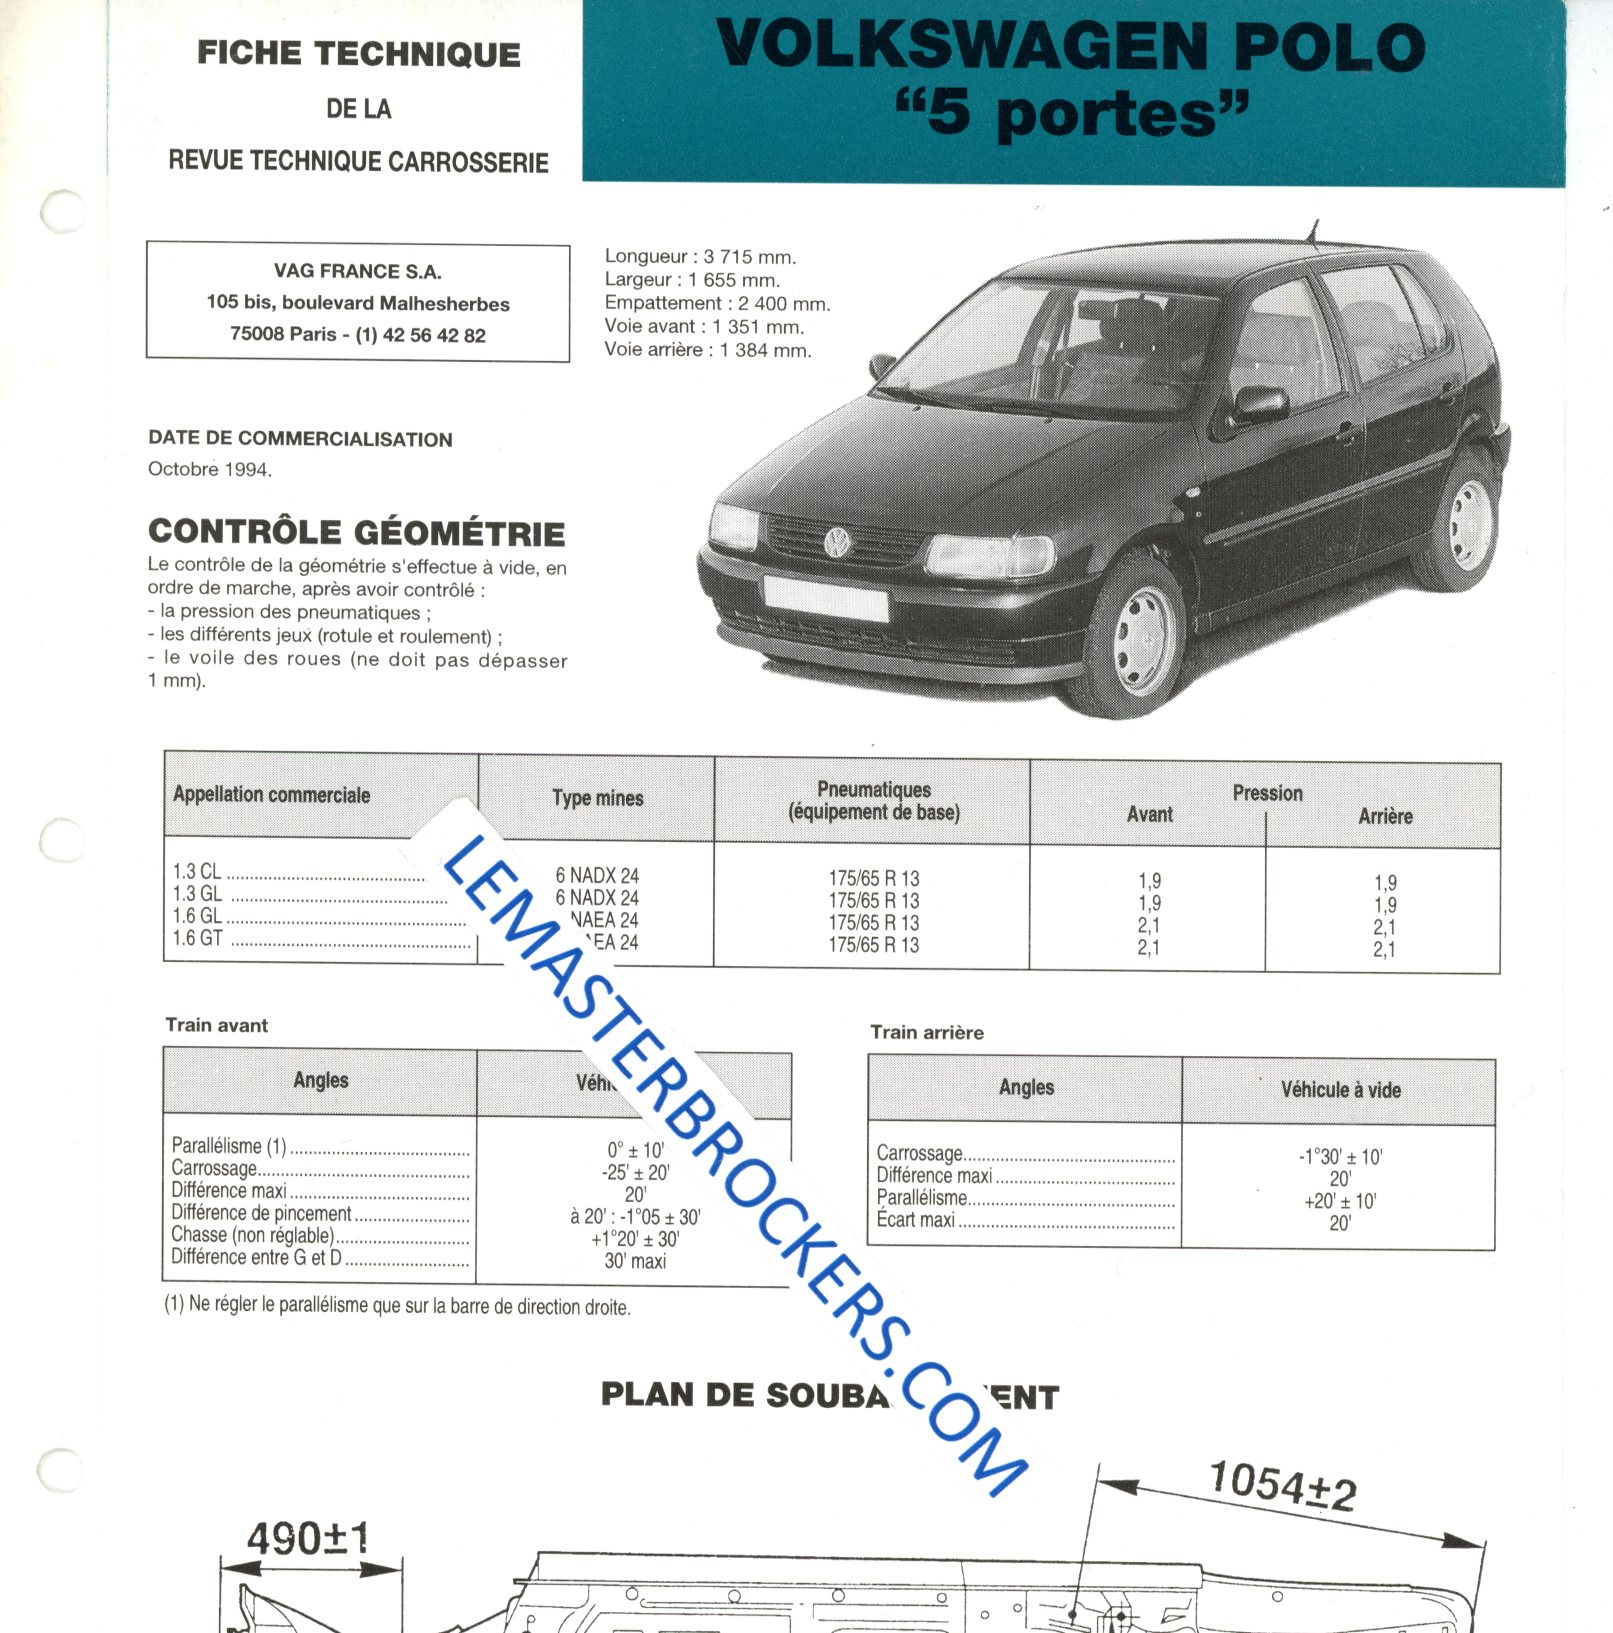 VOLKSWAGEN POLO 5 PORTES SUR LA FICHE TECHNIQUE CARROSSERIE - VW POLO RTC